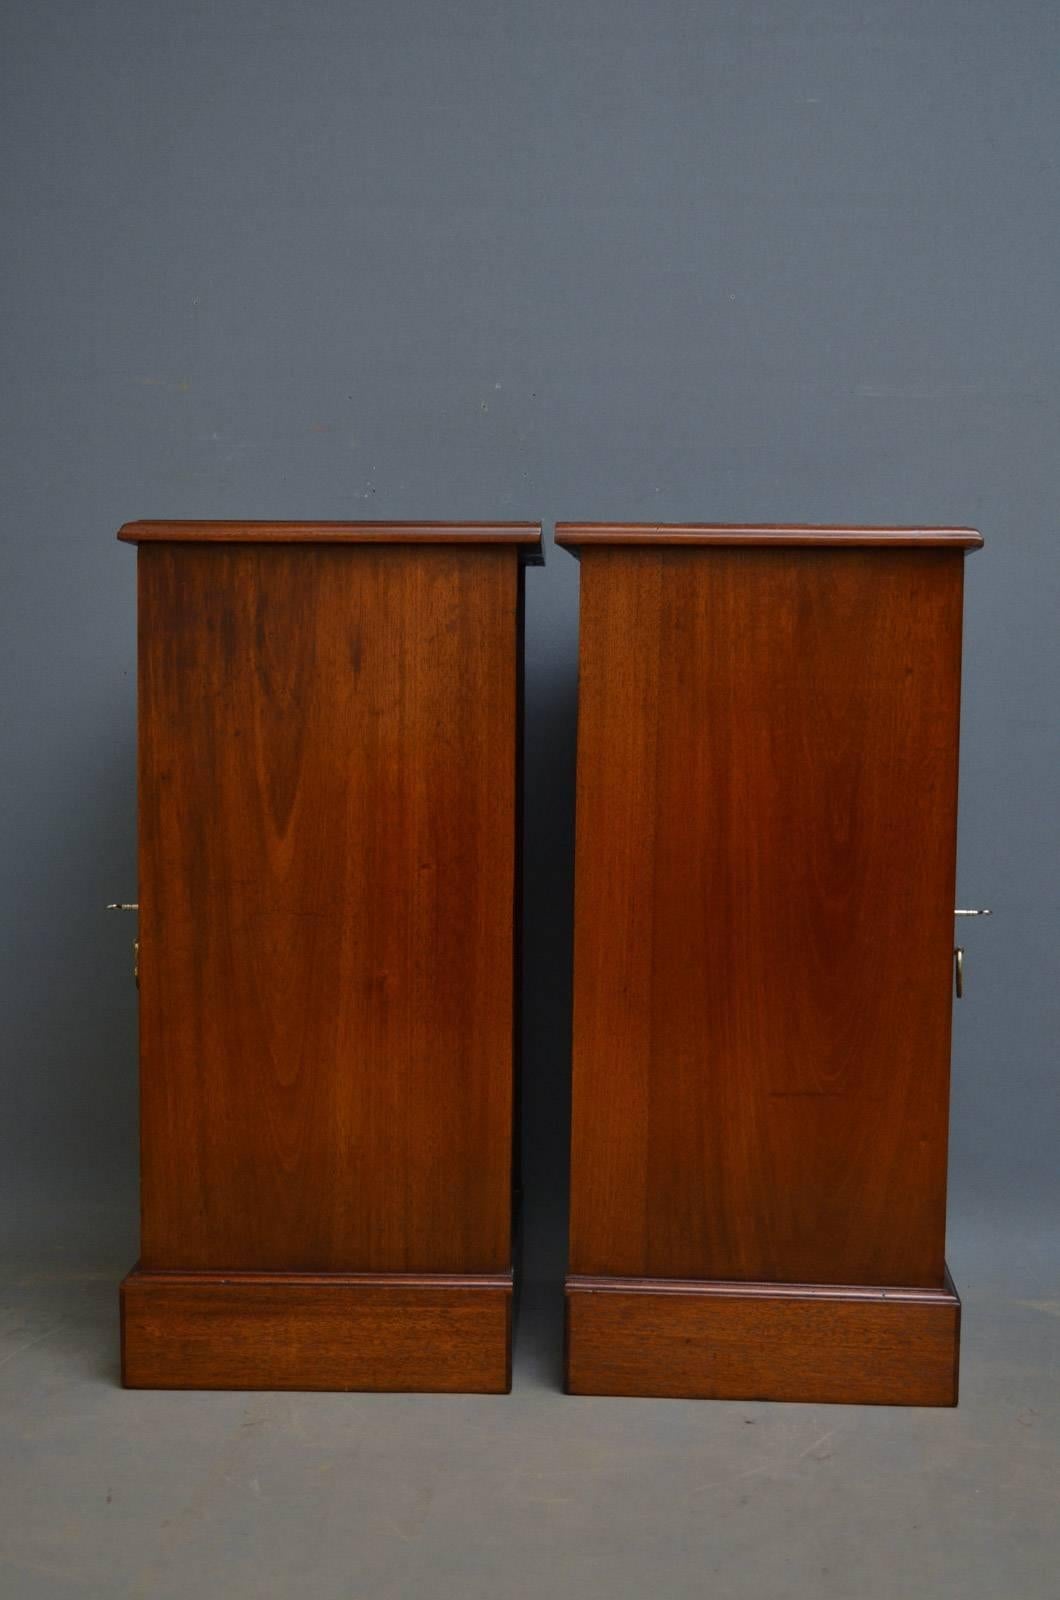 Edwardian Mahogany Bedside Cabinets by Maple & Co. 1